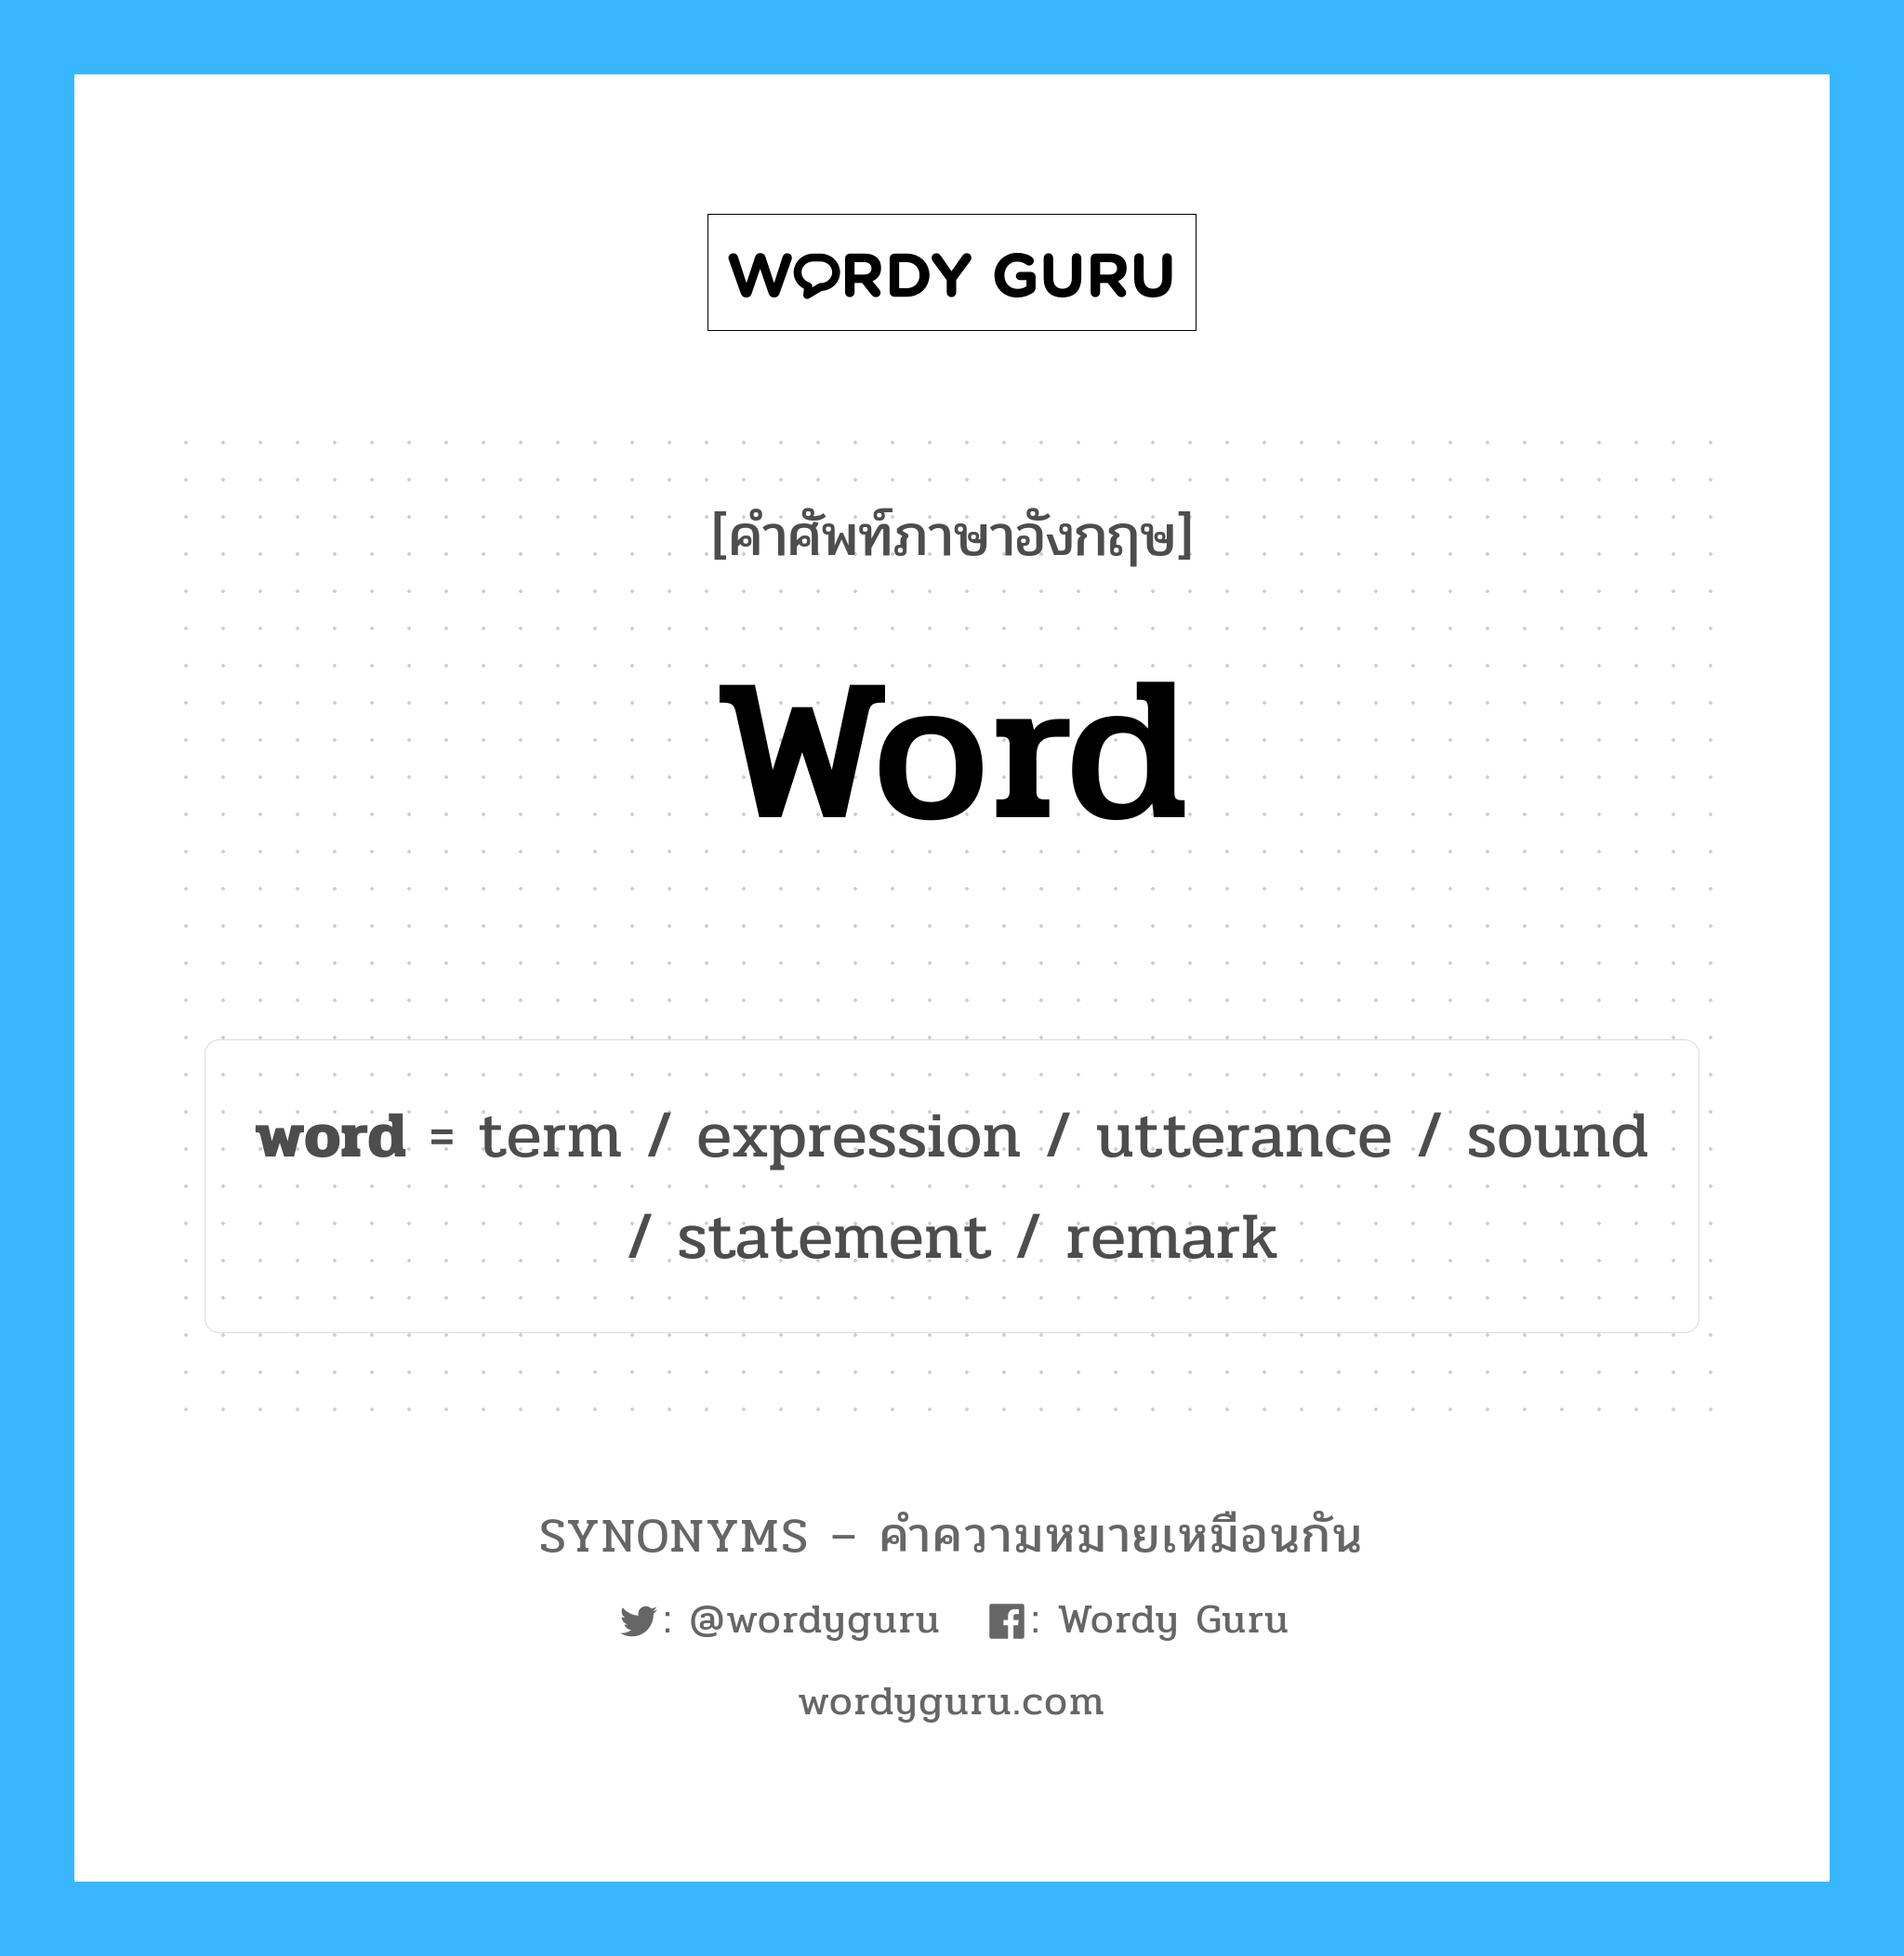 sound เป็นหนึ่งใน word และมีคำอื่น ๆ อีกดังนี้, คำศัพท์ภาษาอังกฤษ sound ความหมายคล้ายกันกับ word แปลว่า เสียง หมวด word